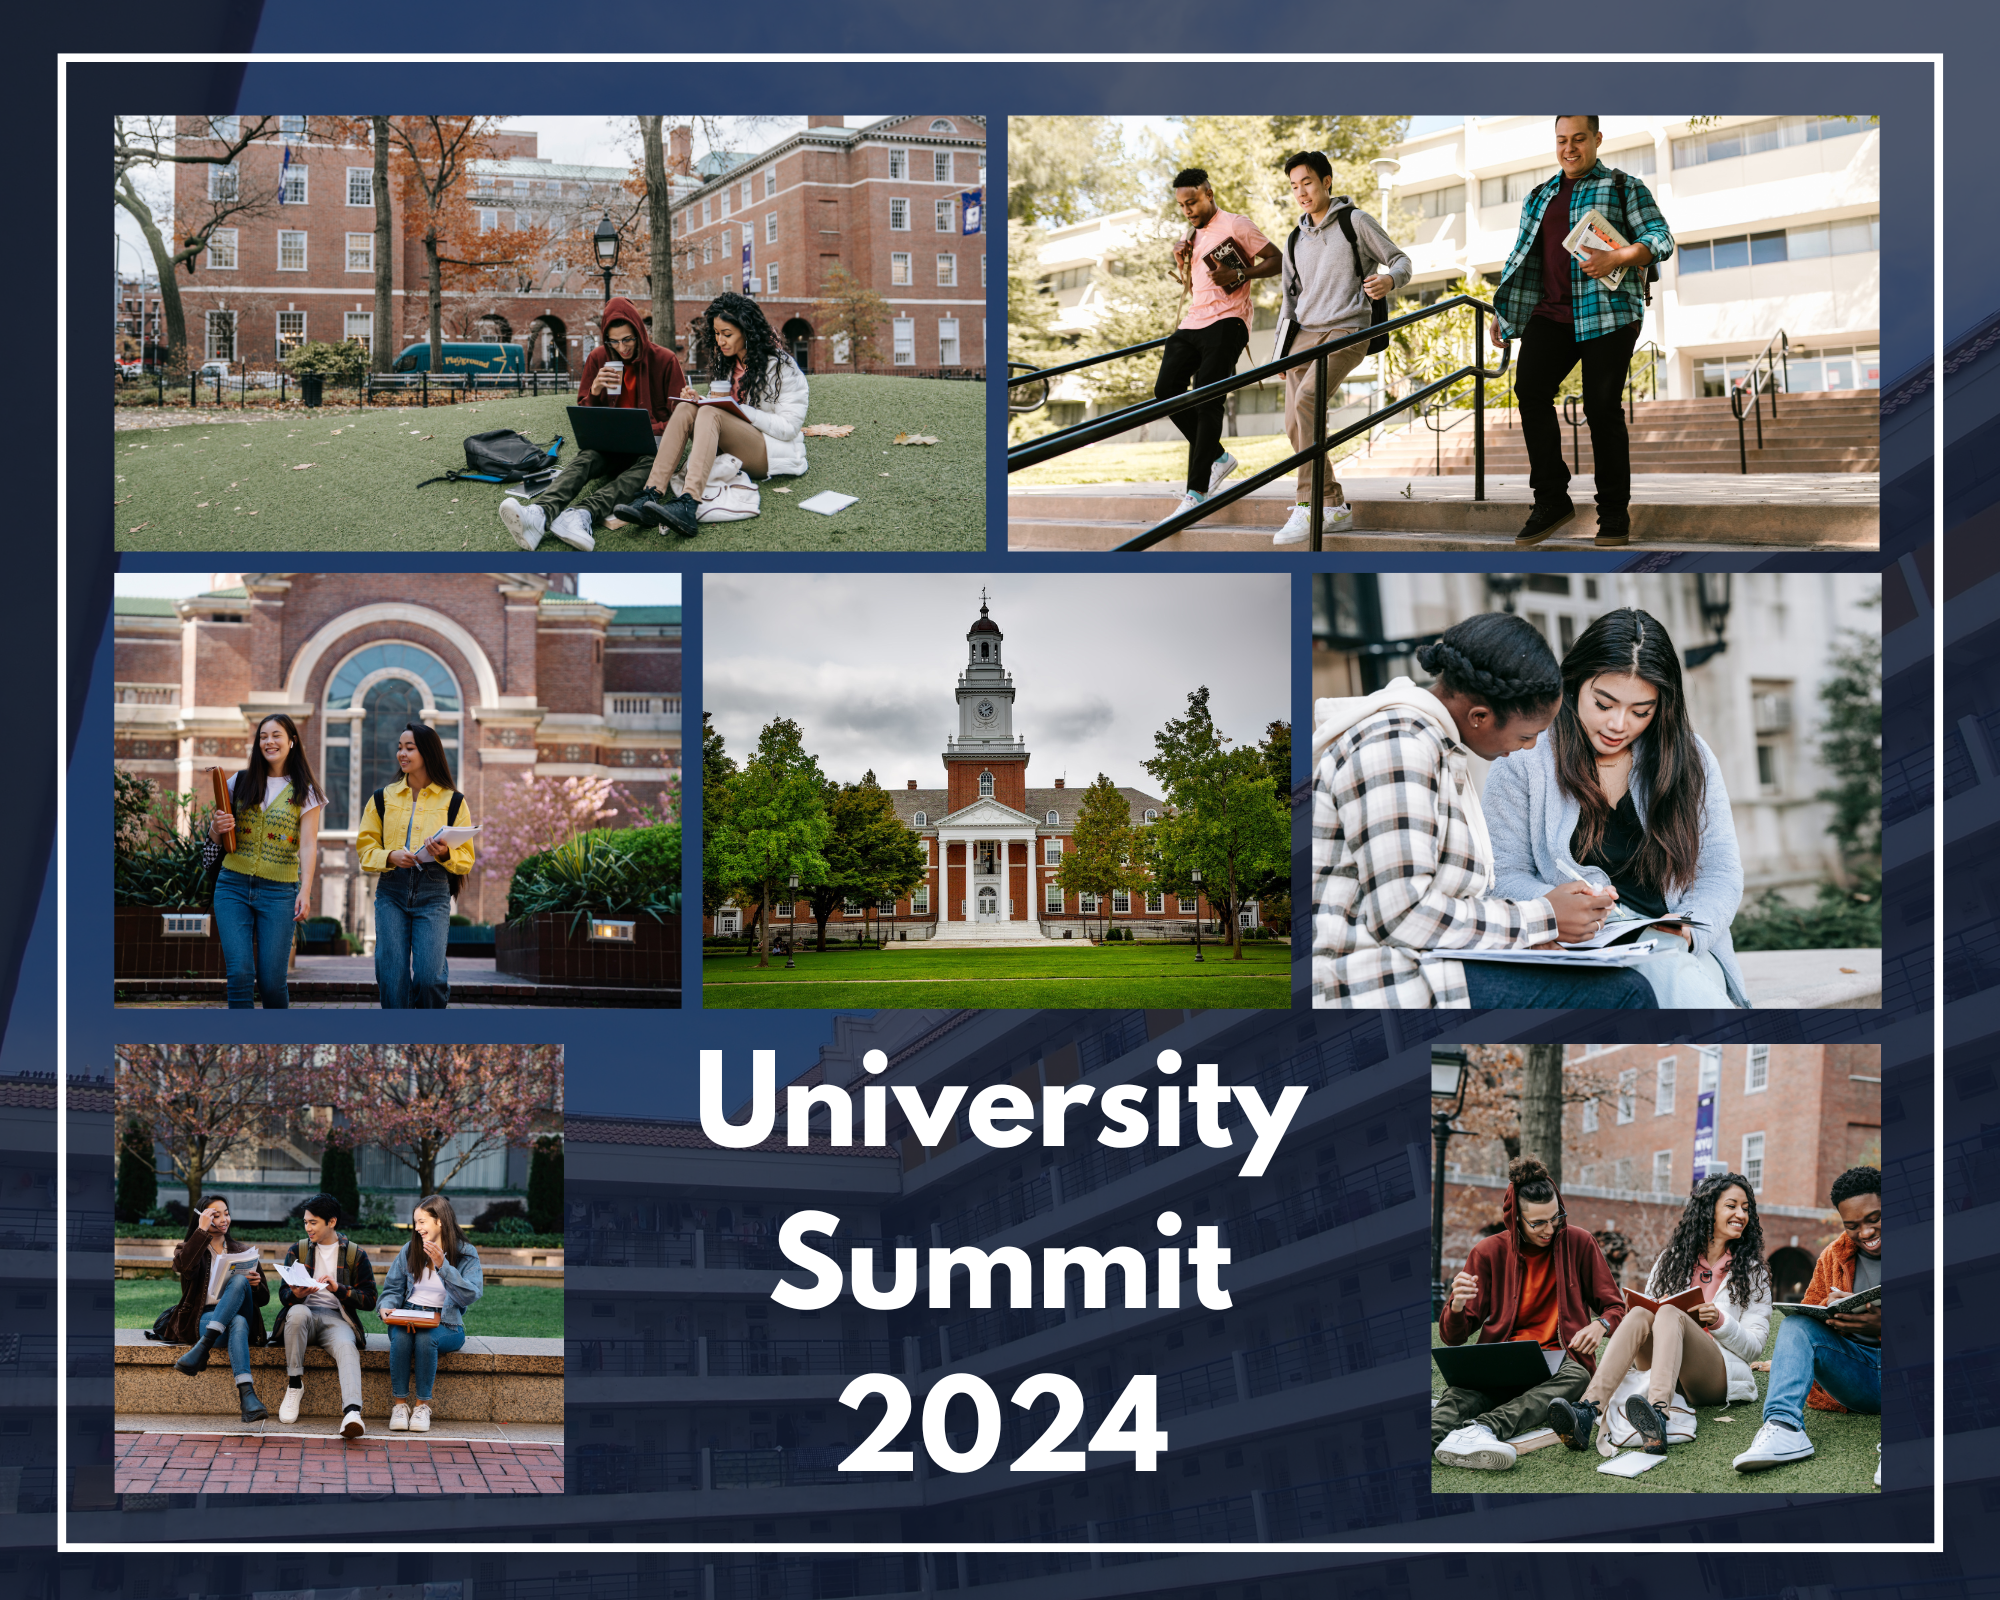 University Summit 2024 collage